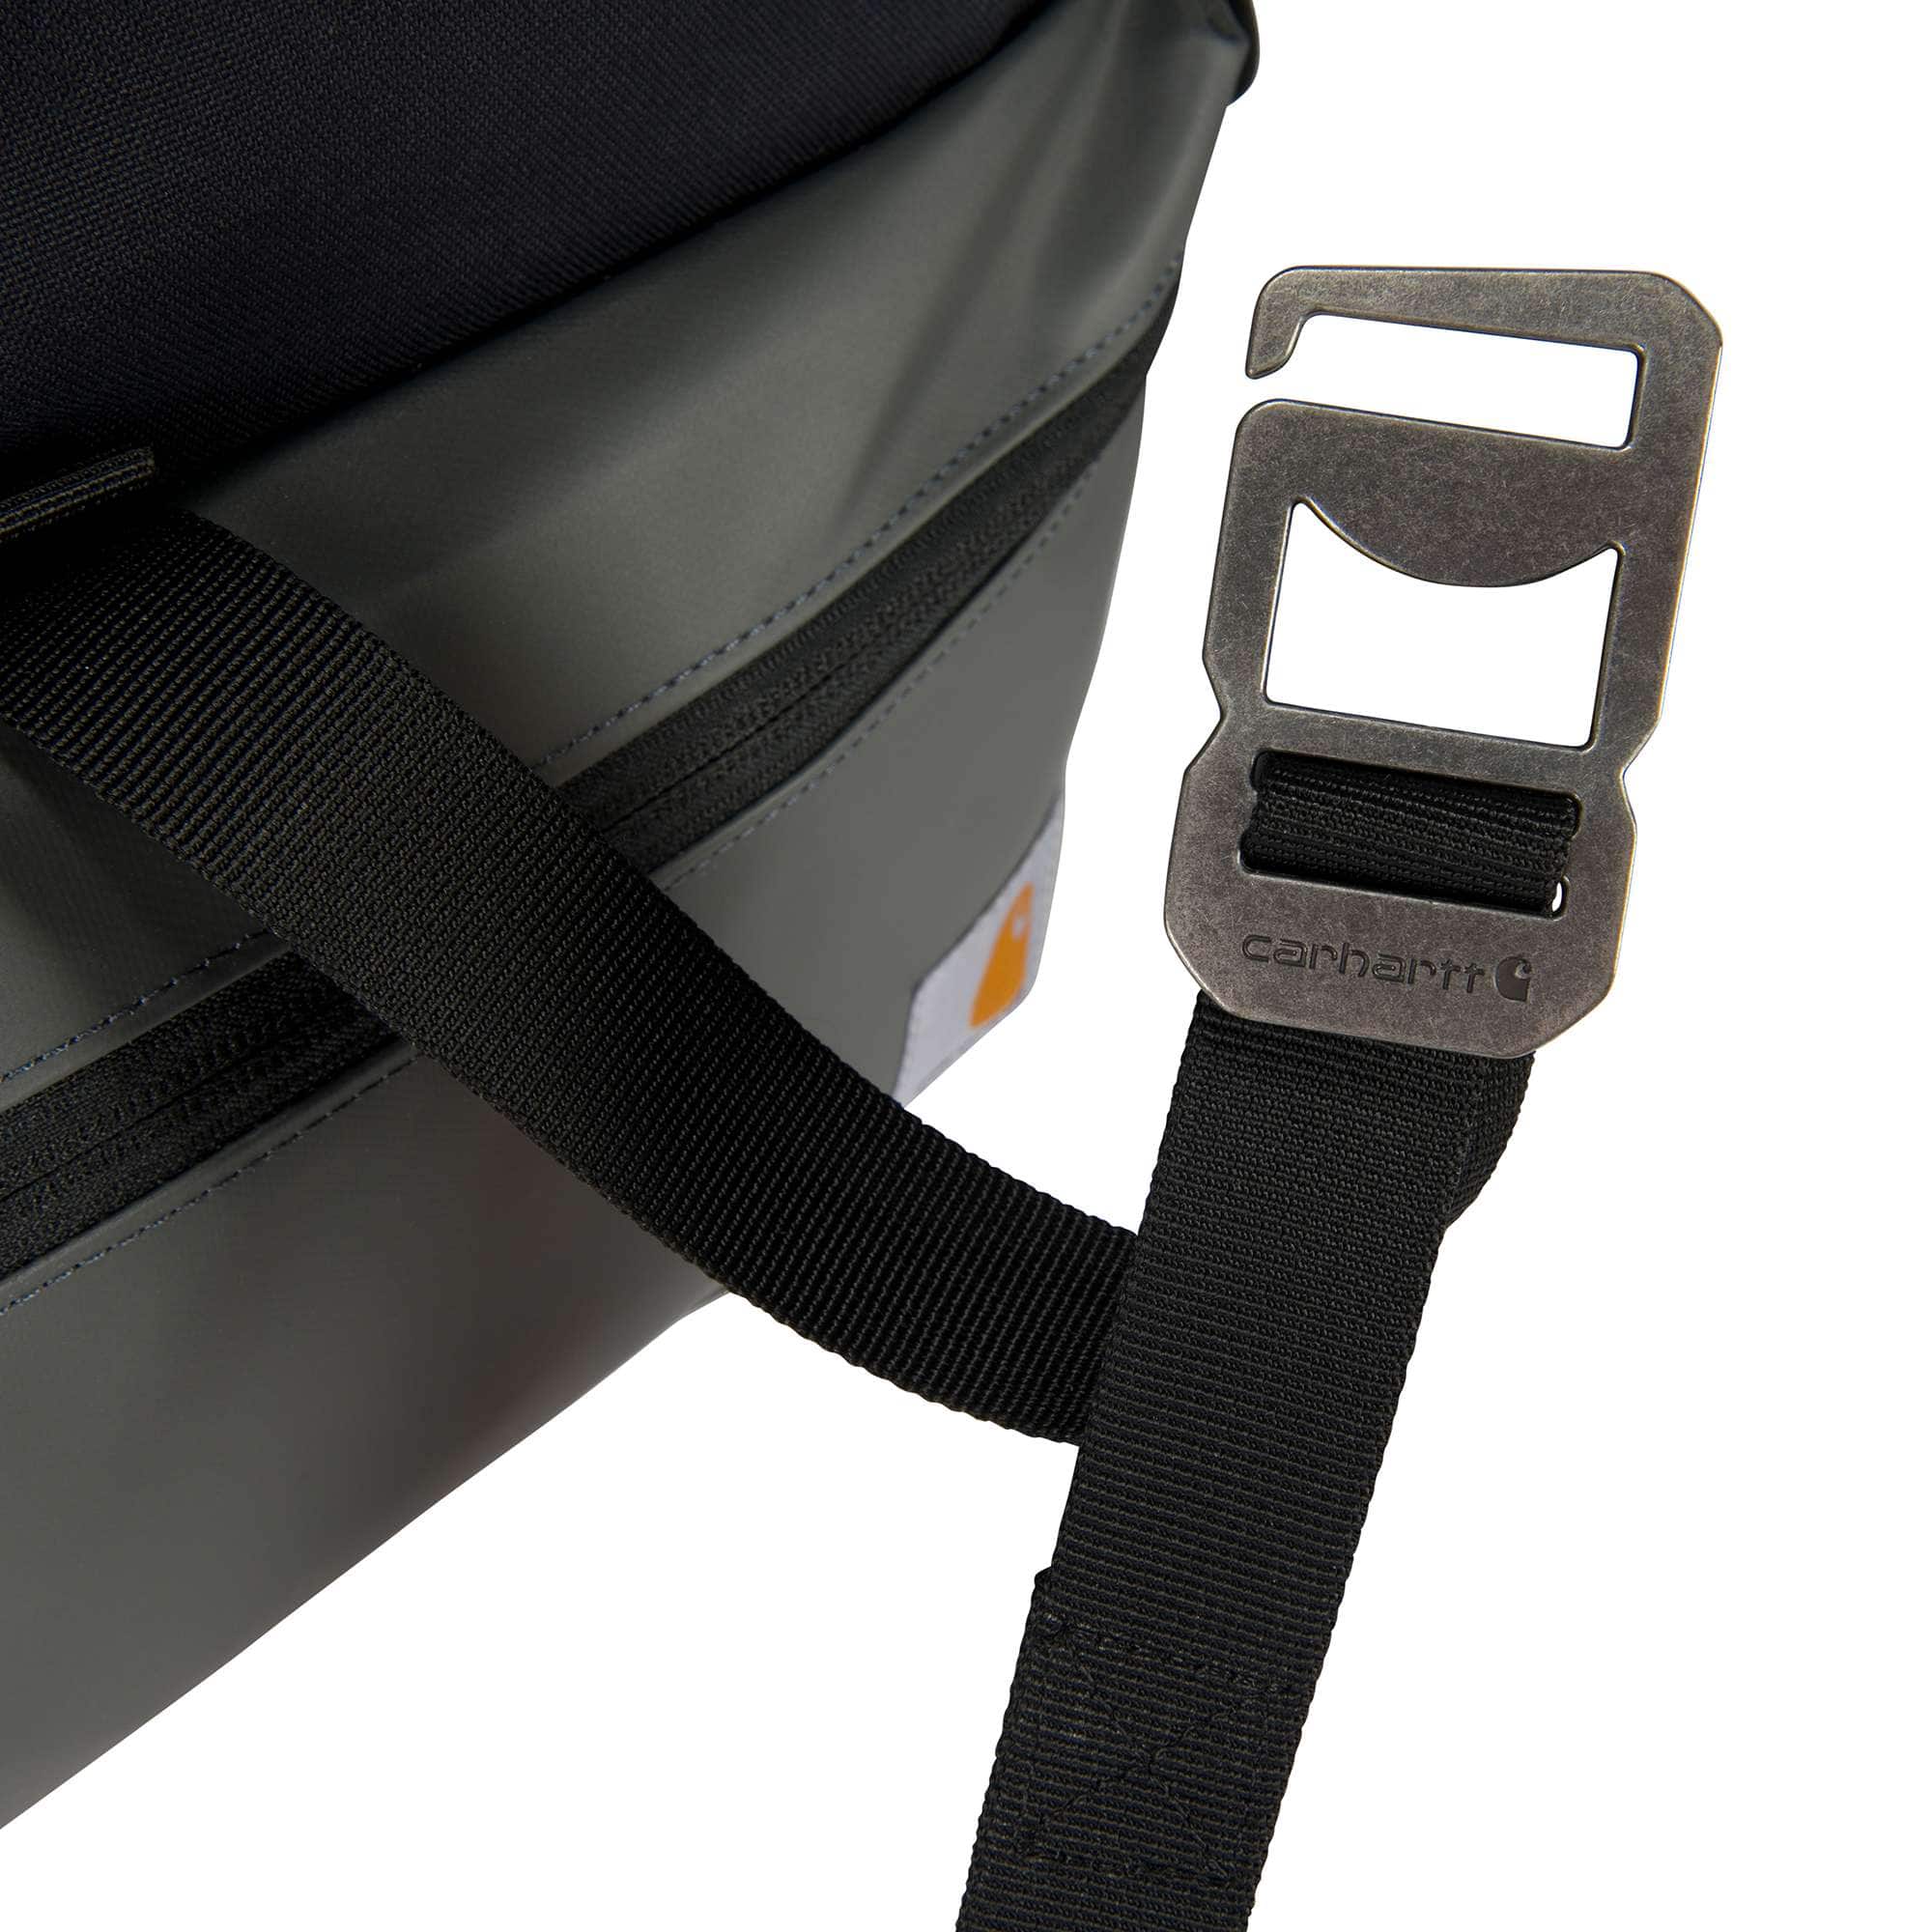 40L Nylon Roll-Top Backpack